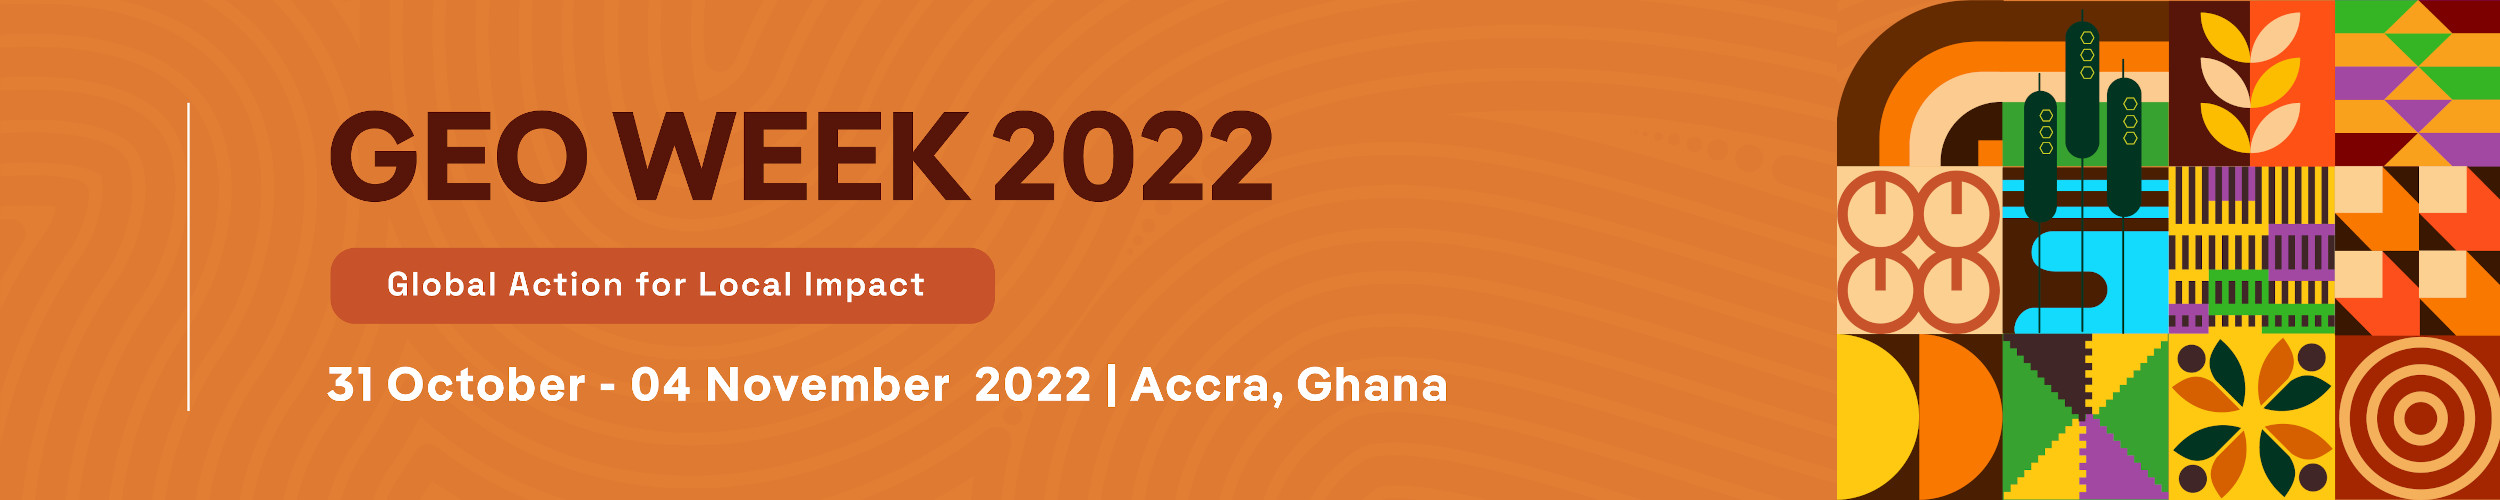 GeoWeek 2022 banner